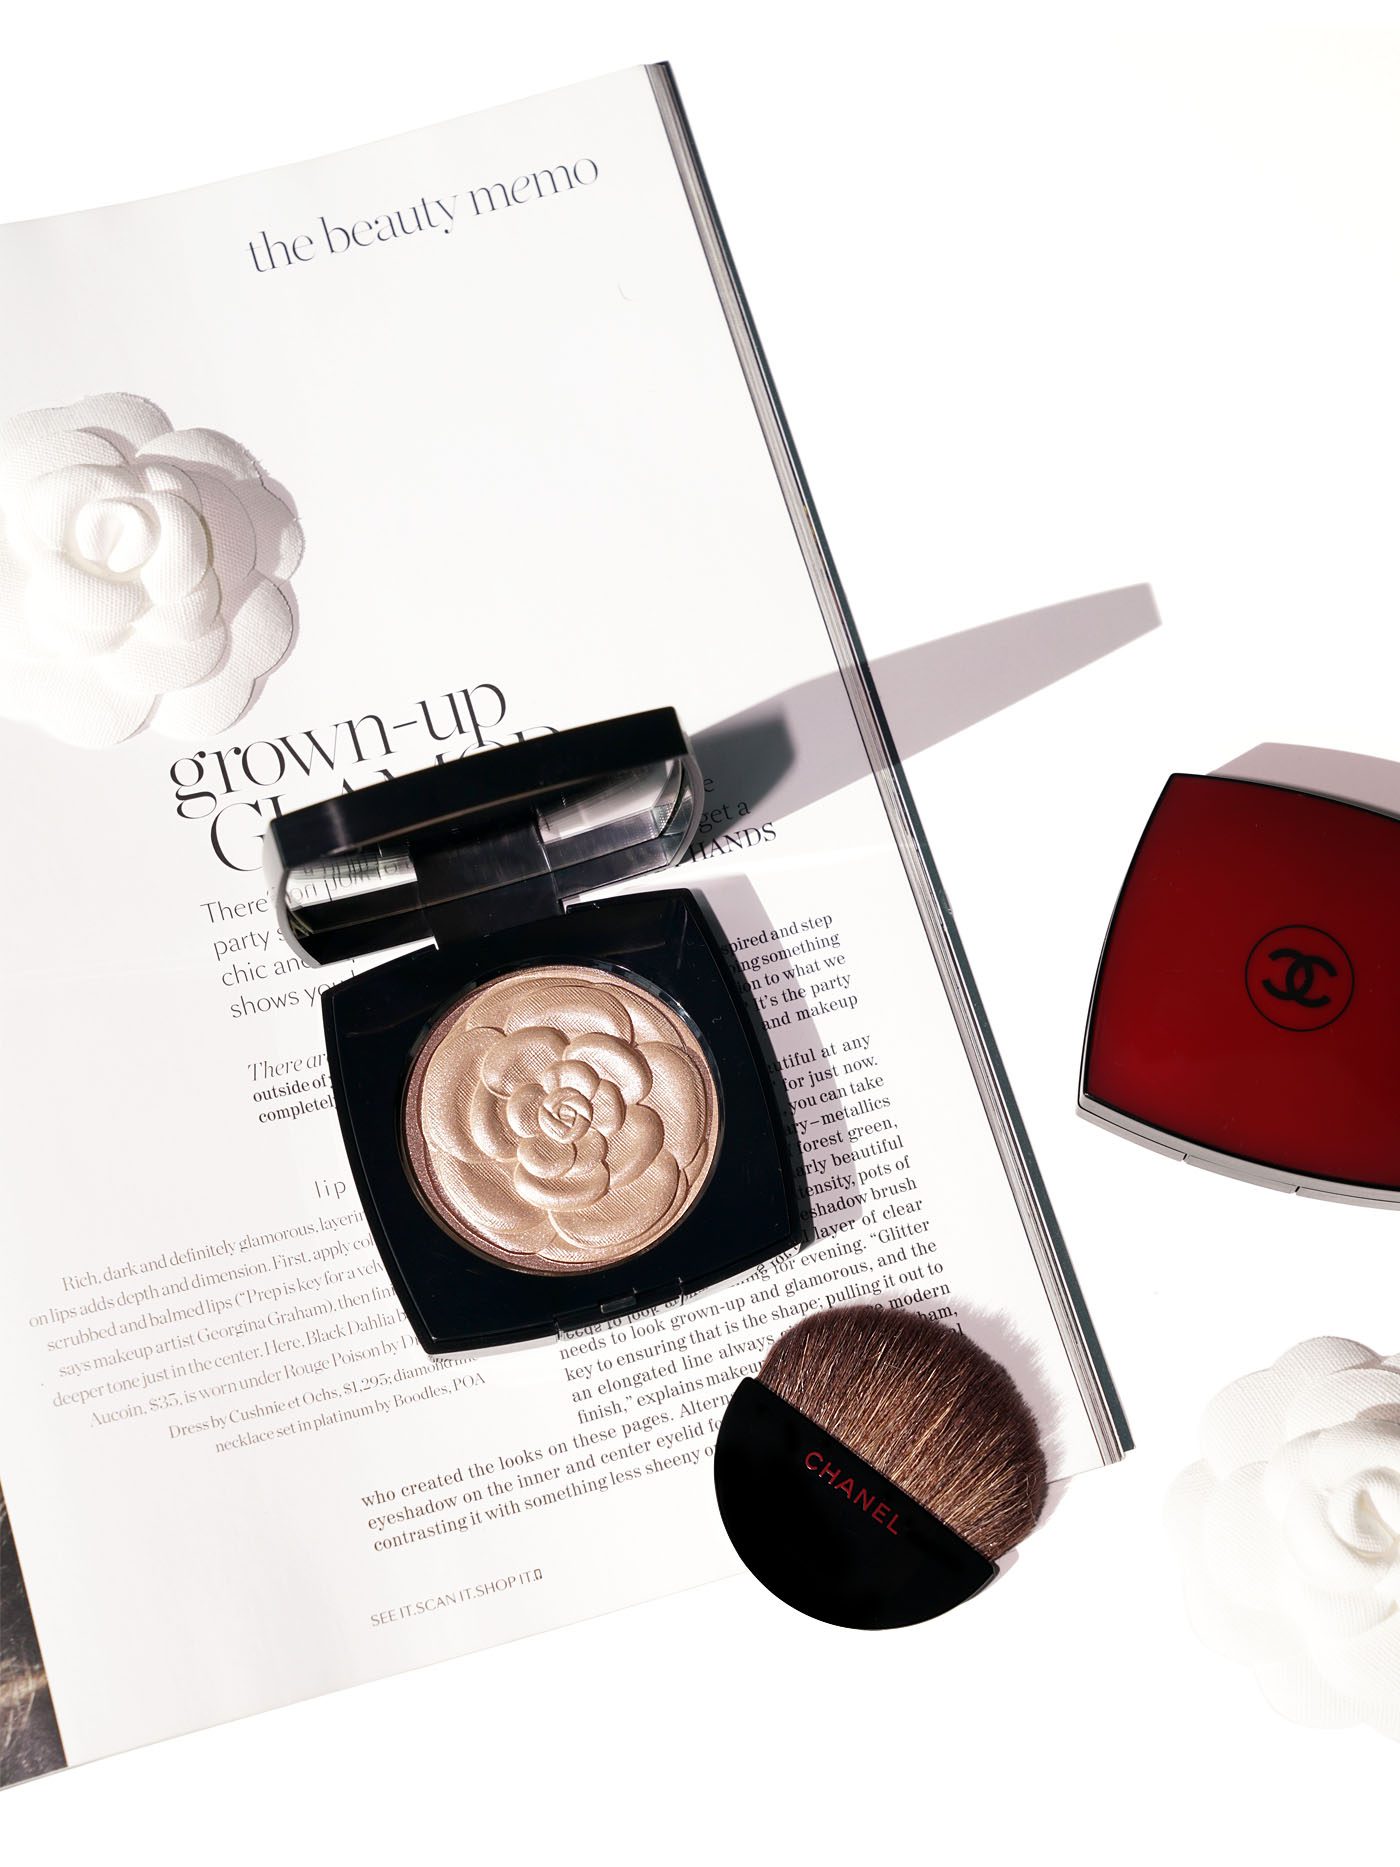 Camelia-de-Chanel-Illuminating-Powder-Review - The Beauty Look Book